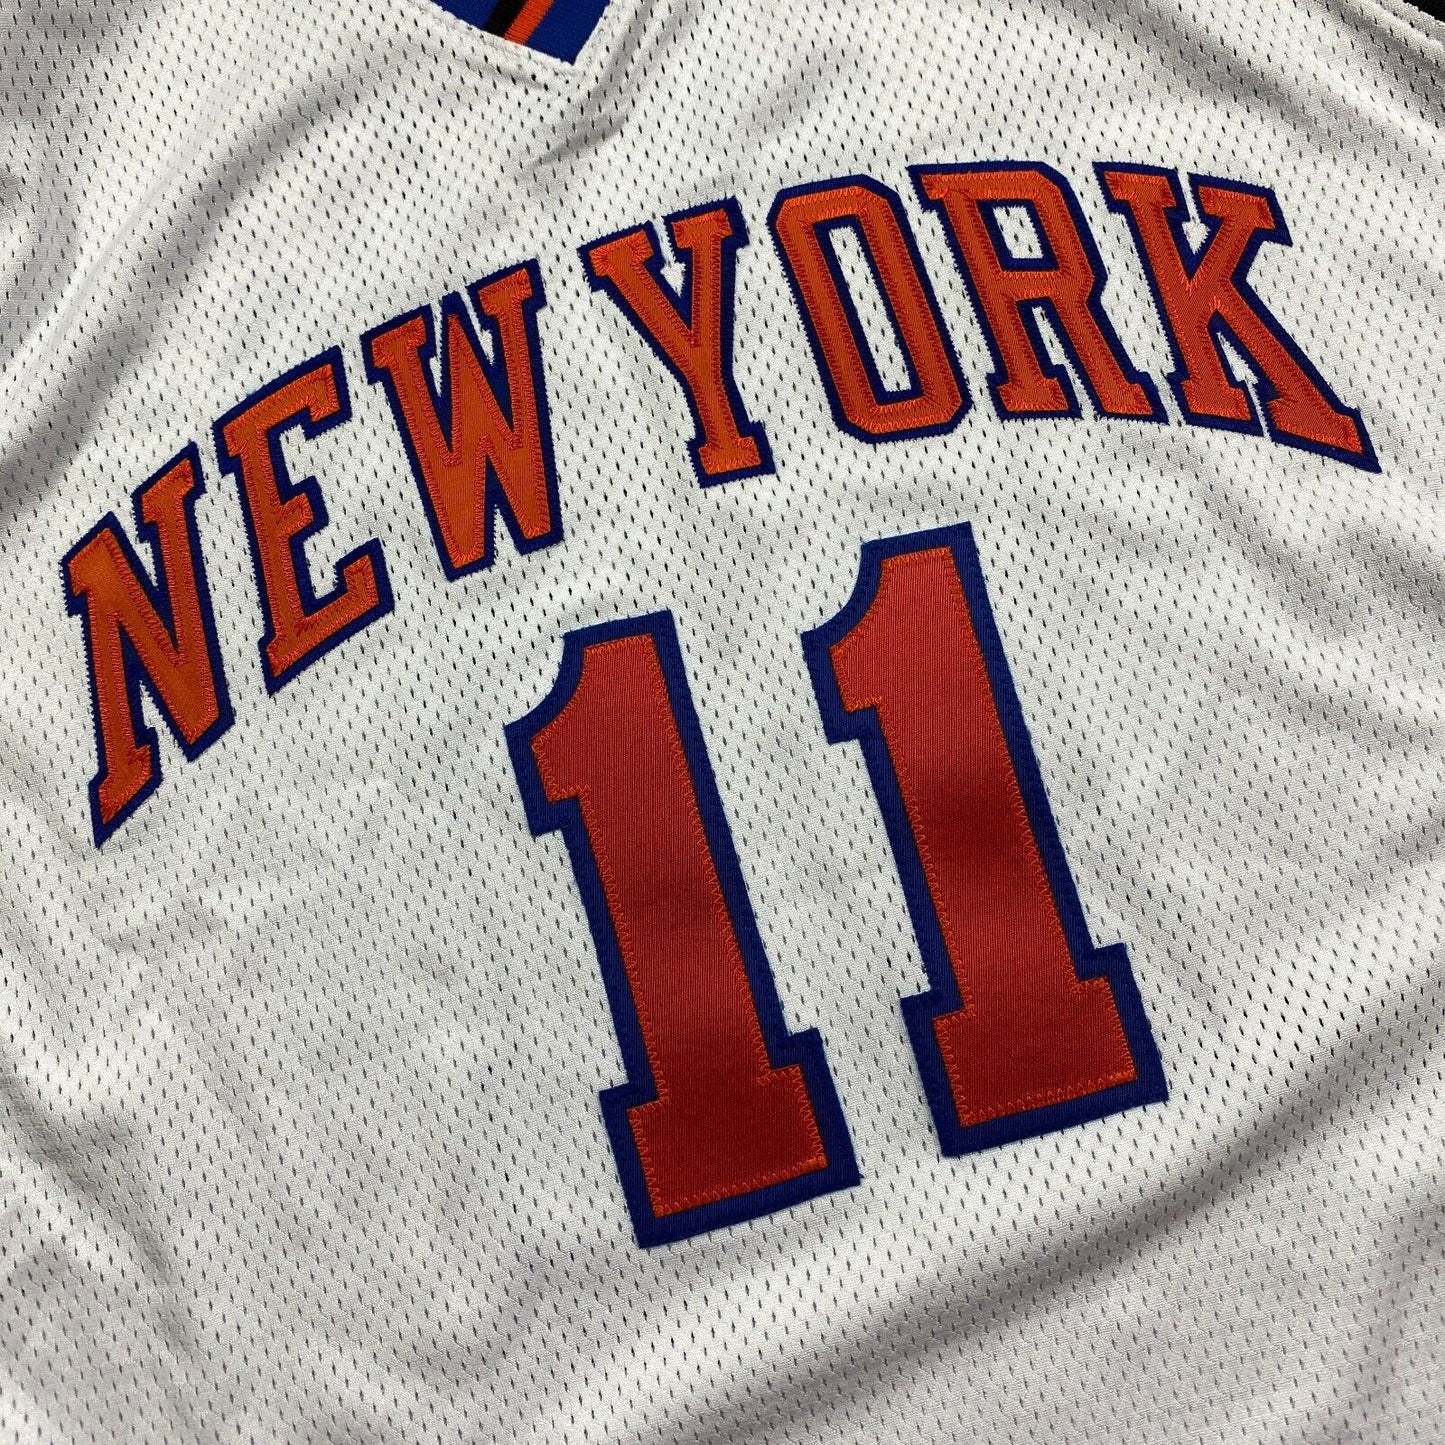 100% Authentic Jamal Crawford Signed Reebok NY Knicks Jersey JSA COA Size 40 M L